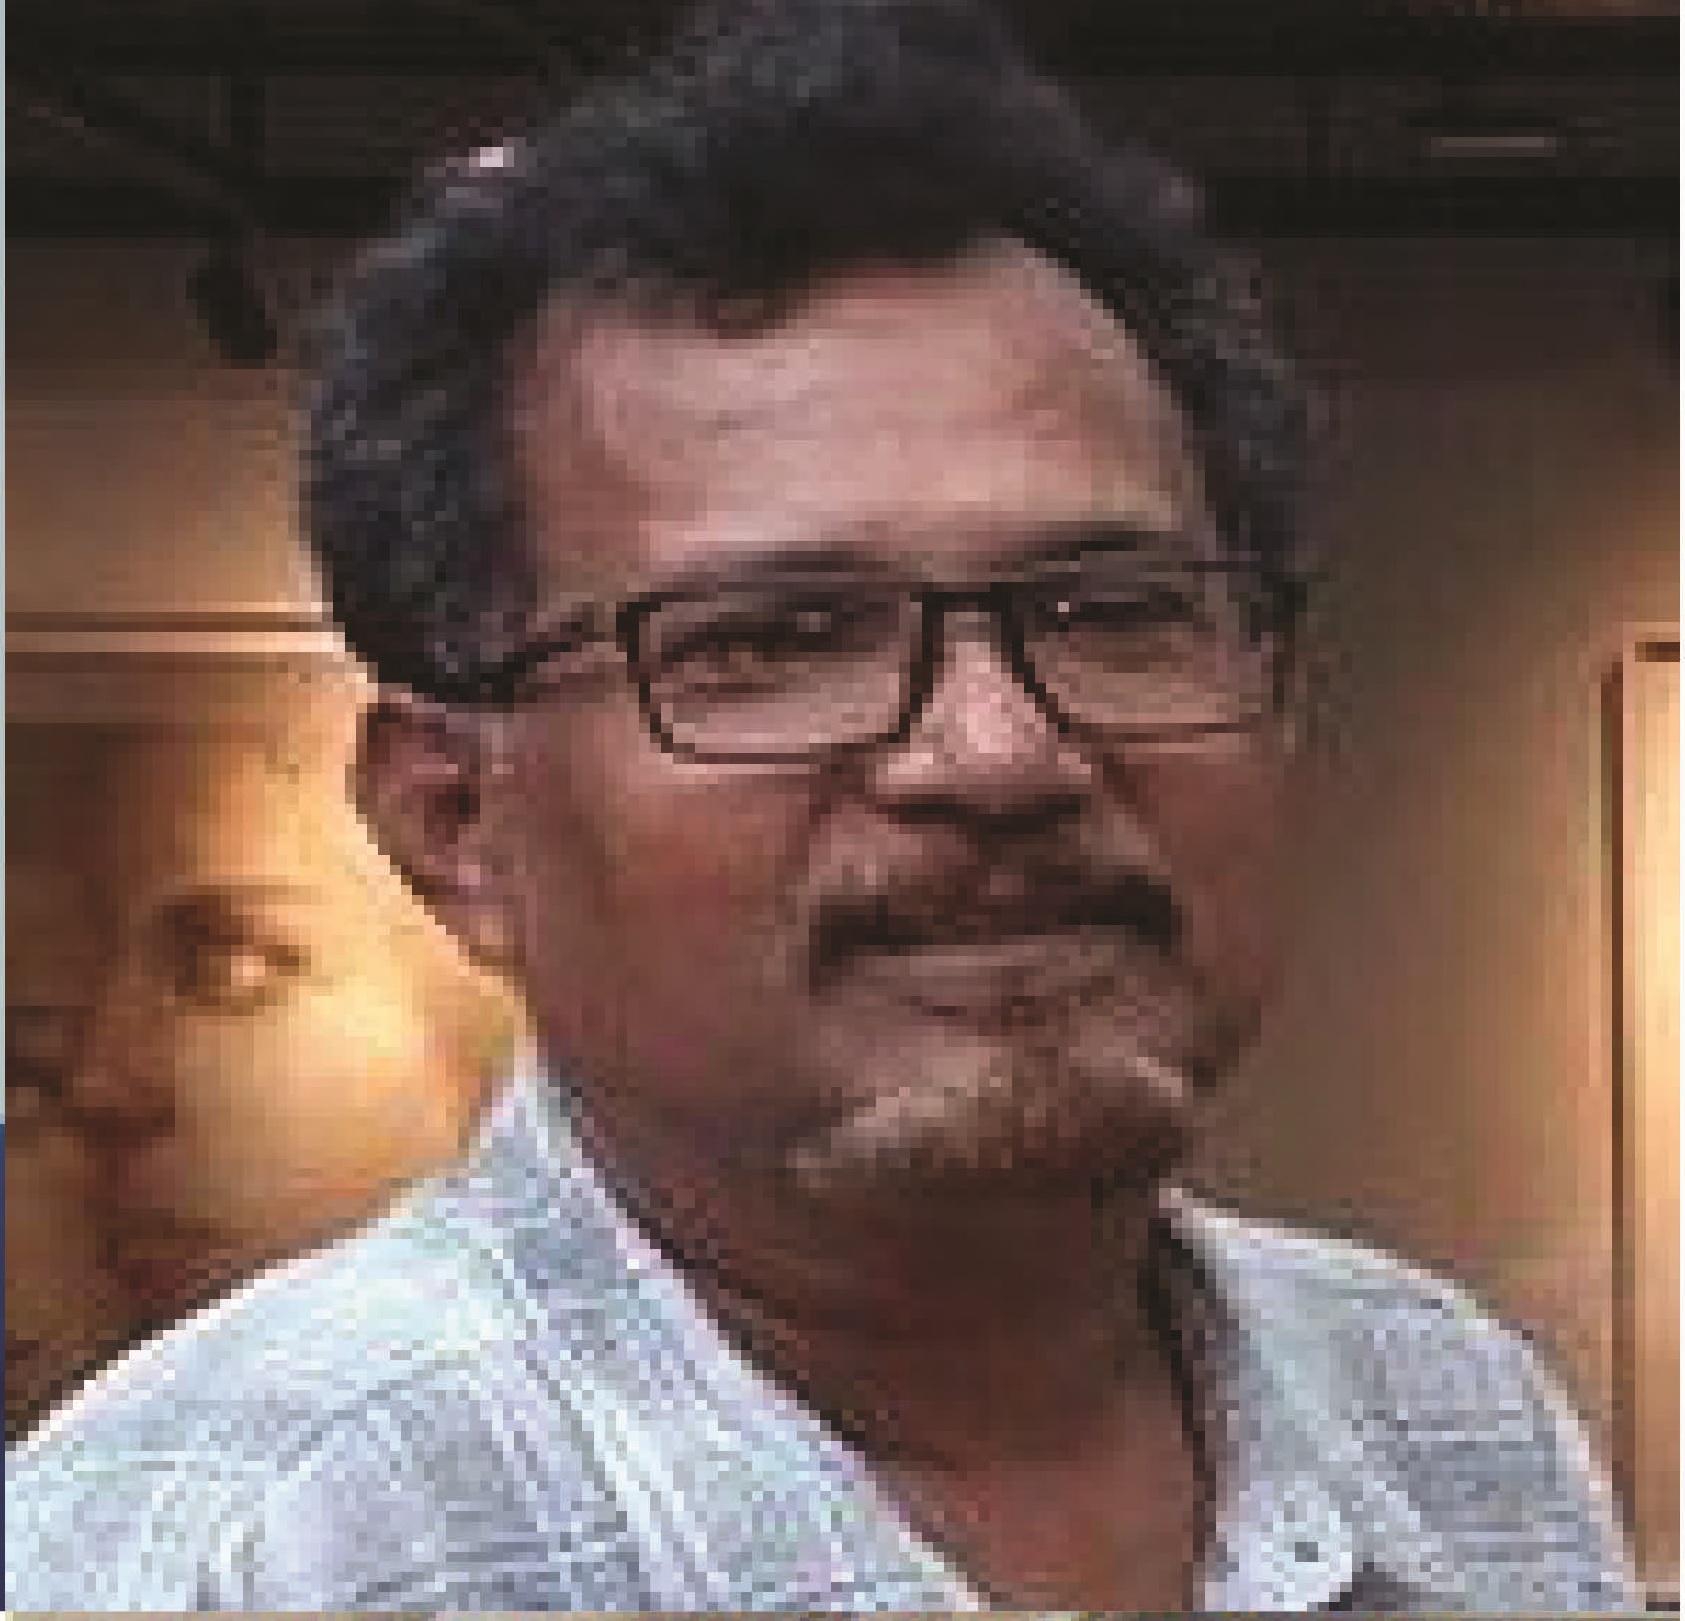 Jahangir Hossain